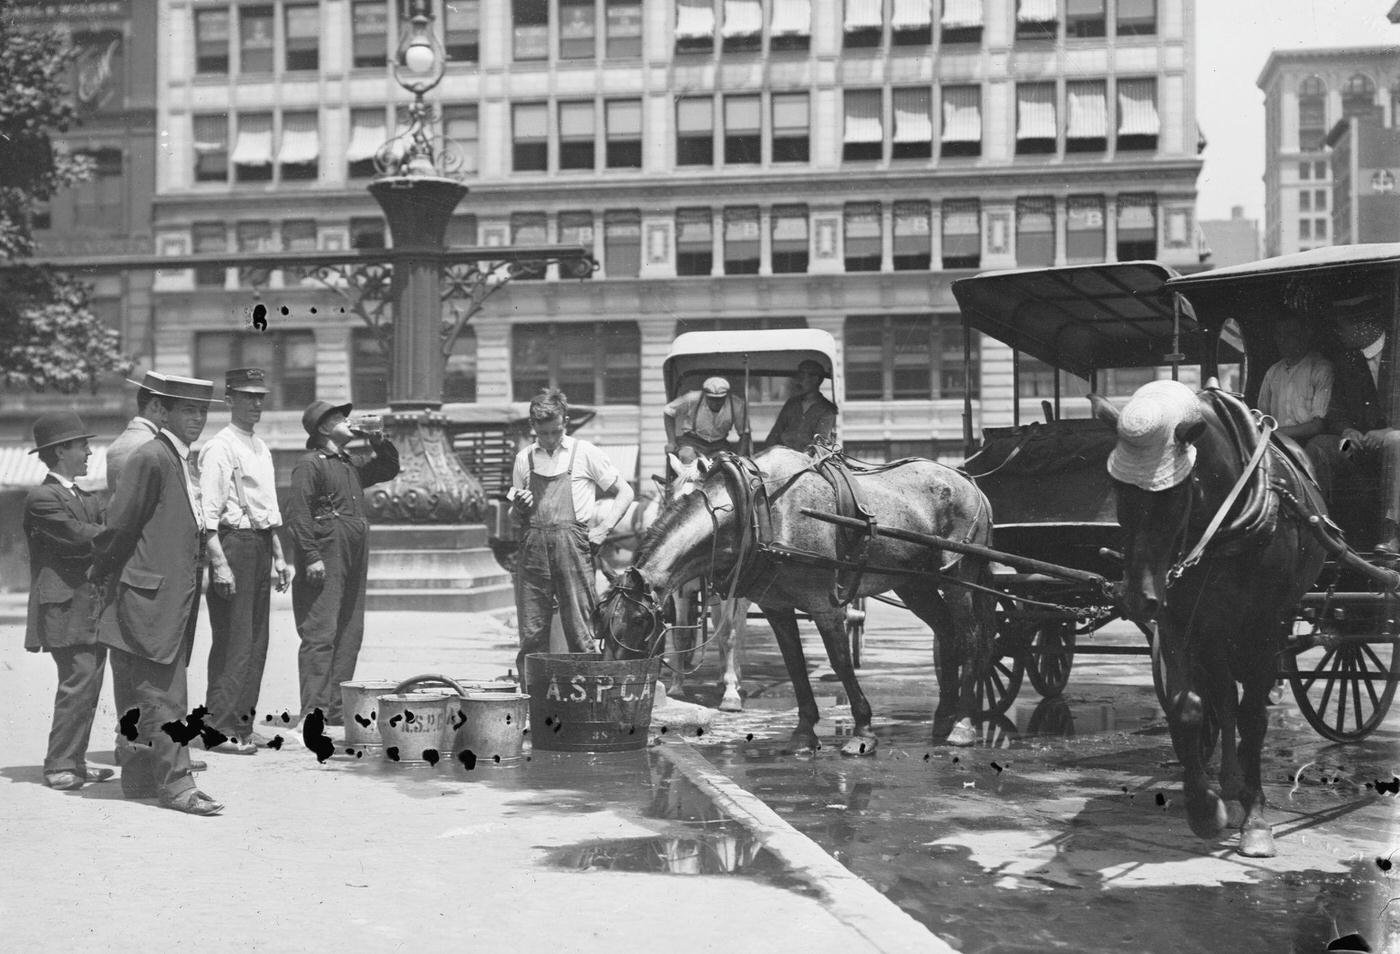 Manhattan Aspca Provides Water For Horses, Circa 1900